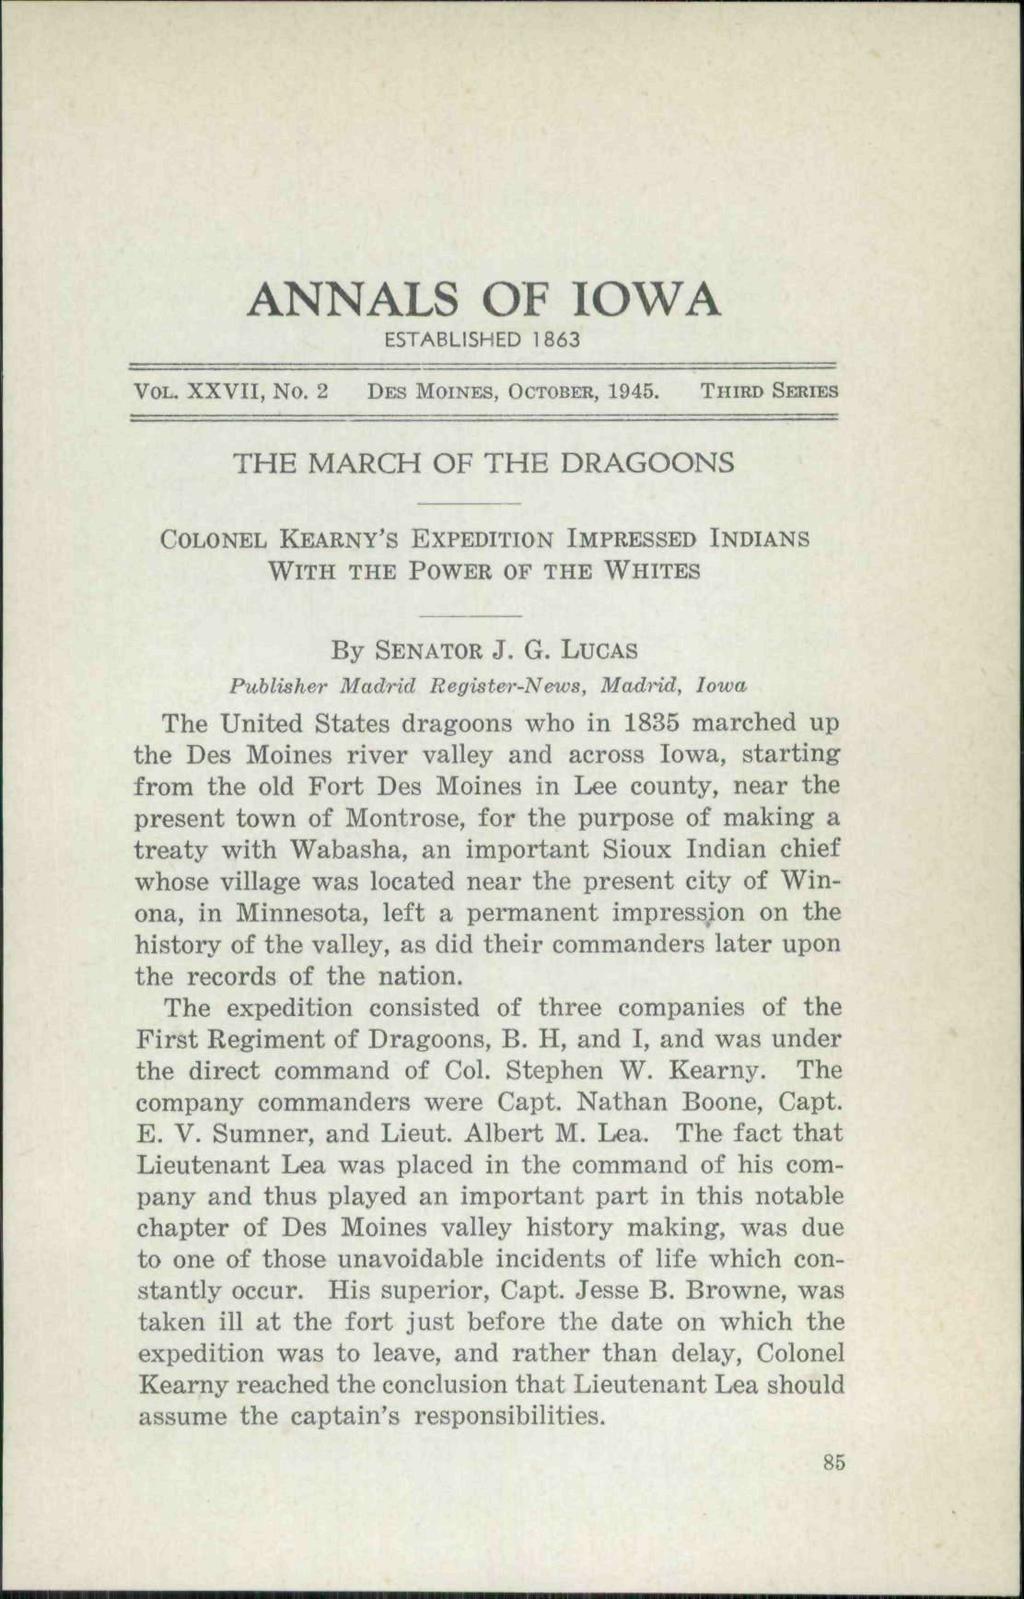 ANNALS OF IOWA ESTABLISHED 1863 VOL. XXVII, No. 2 DES MOINES, OCTOBER, 1945.